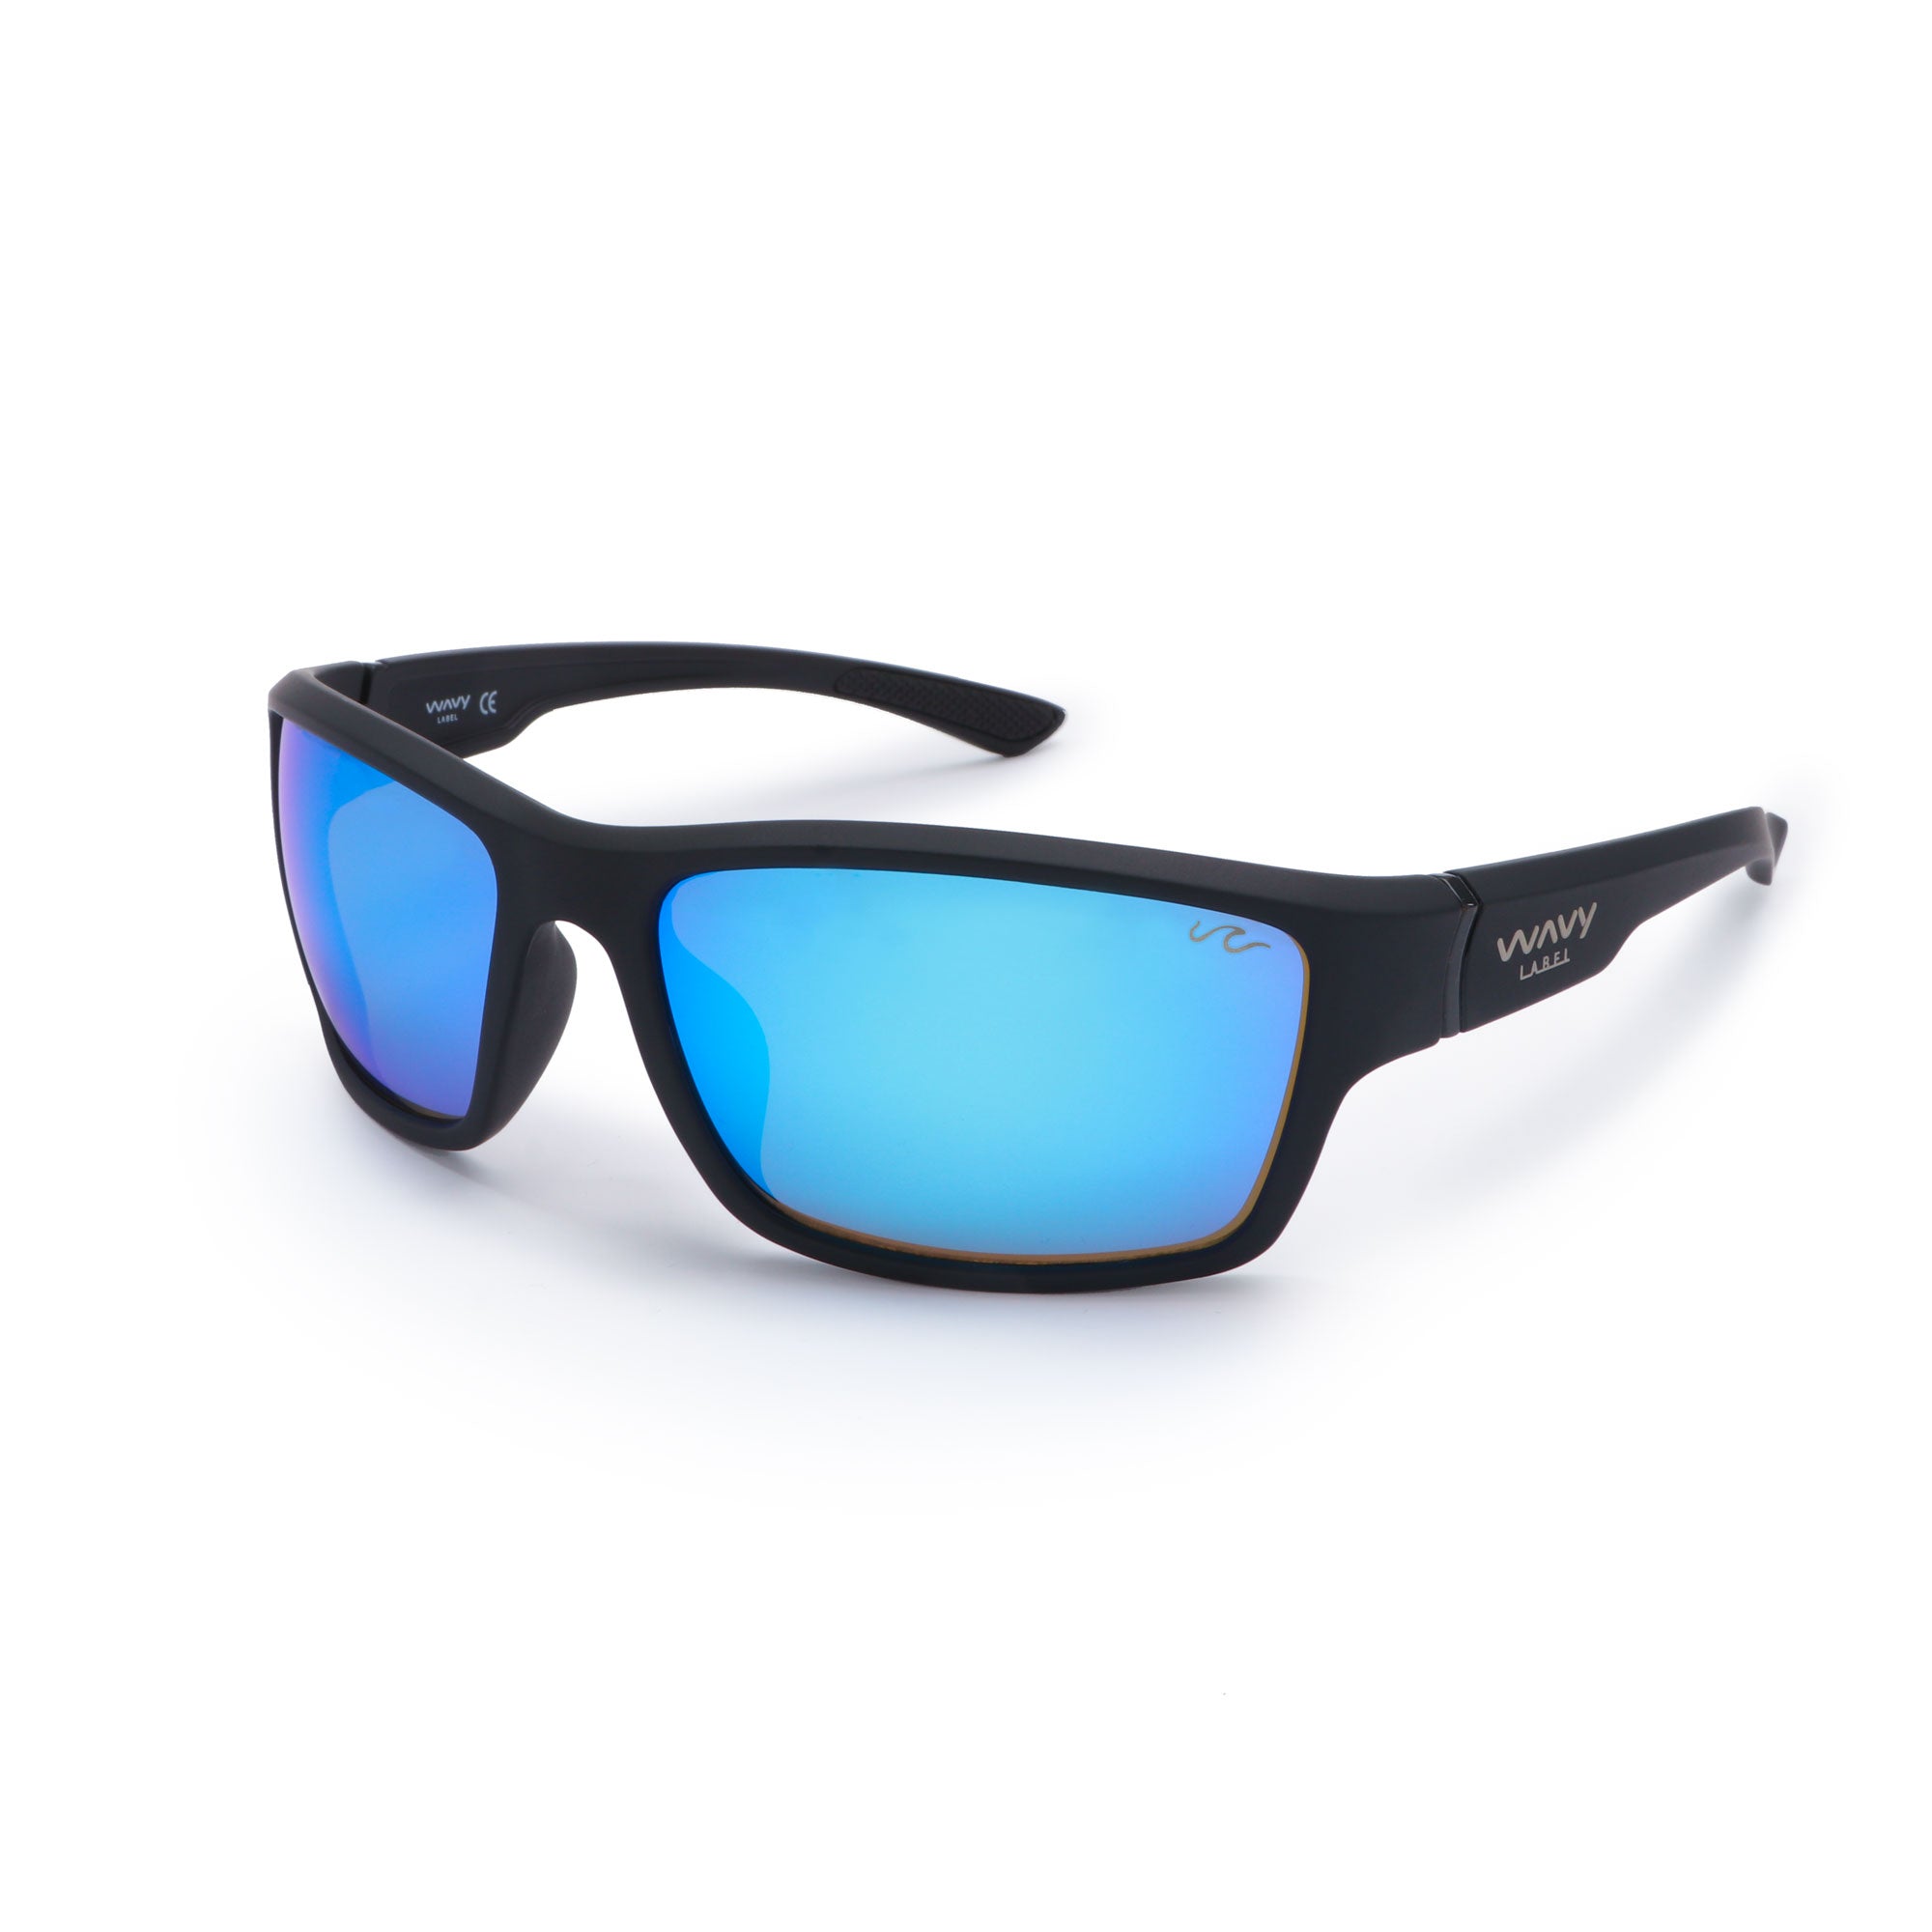 Wavy Label The Spawn Sunglasses Black / Amber Polycarbonate - Blue Lens